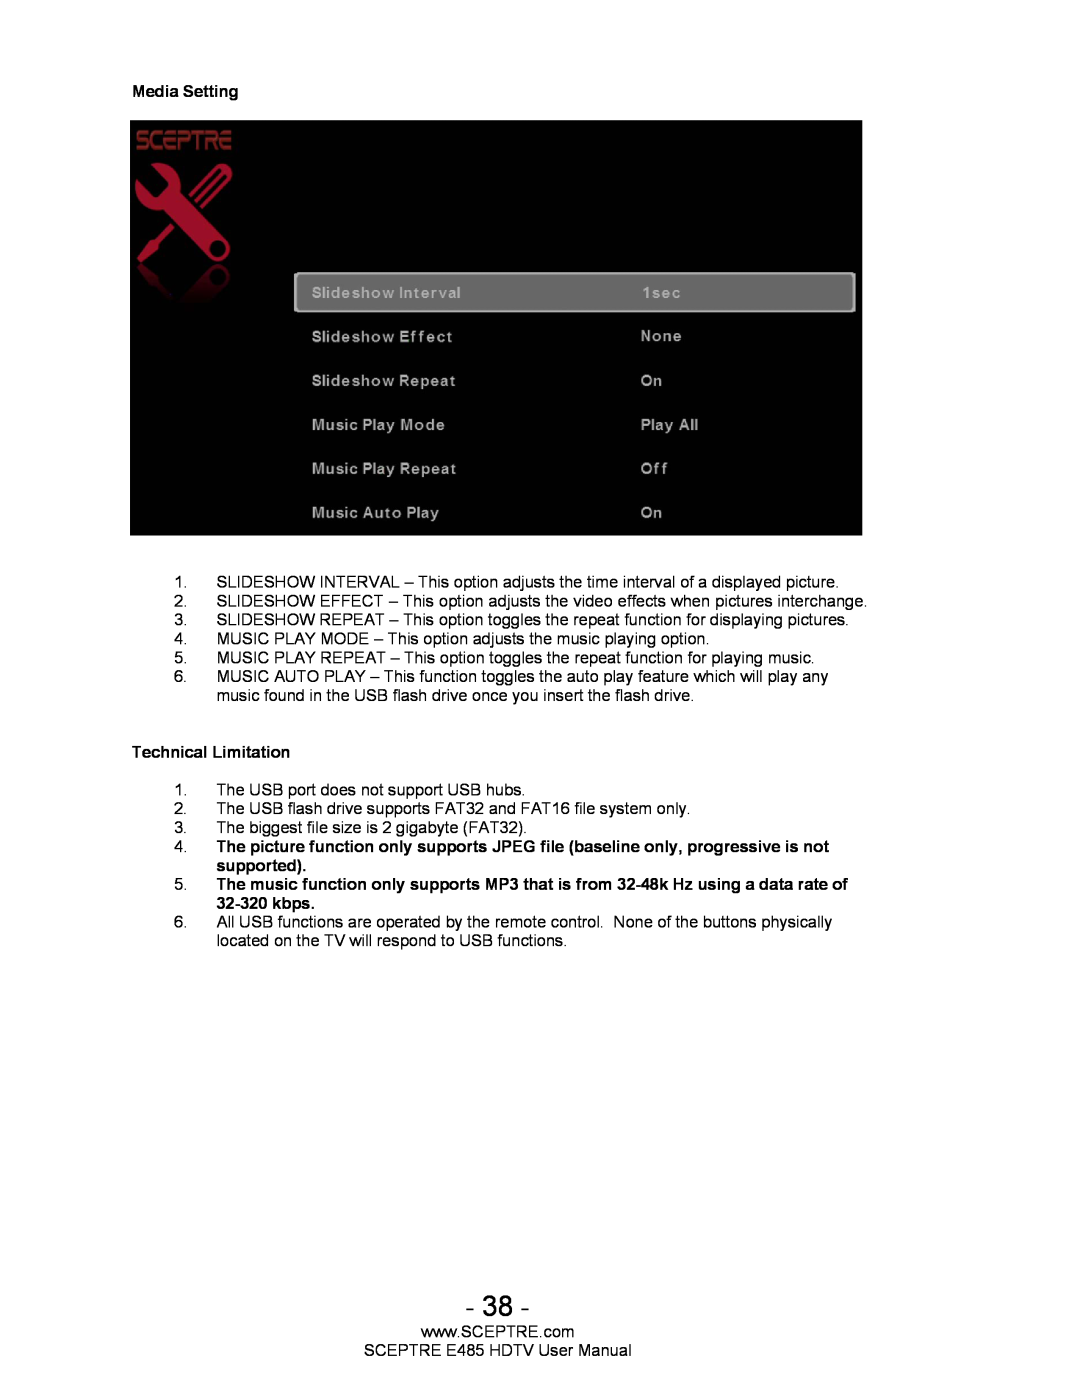 Sceptre Technologies E485 user manual Media Setting, Technical Limitation 